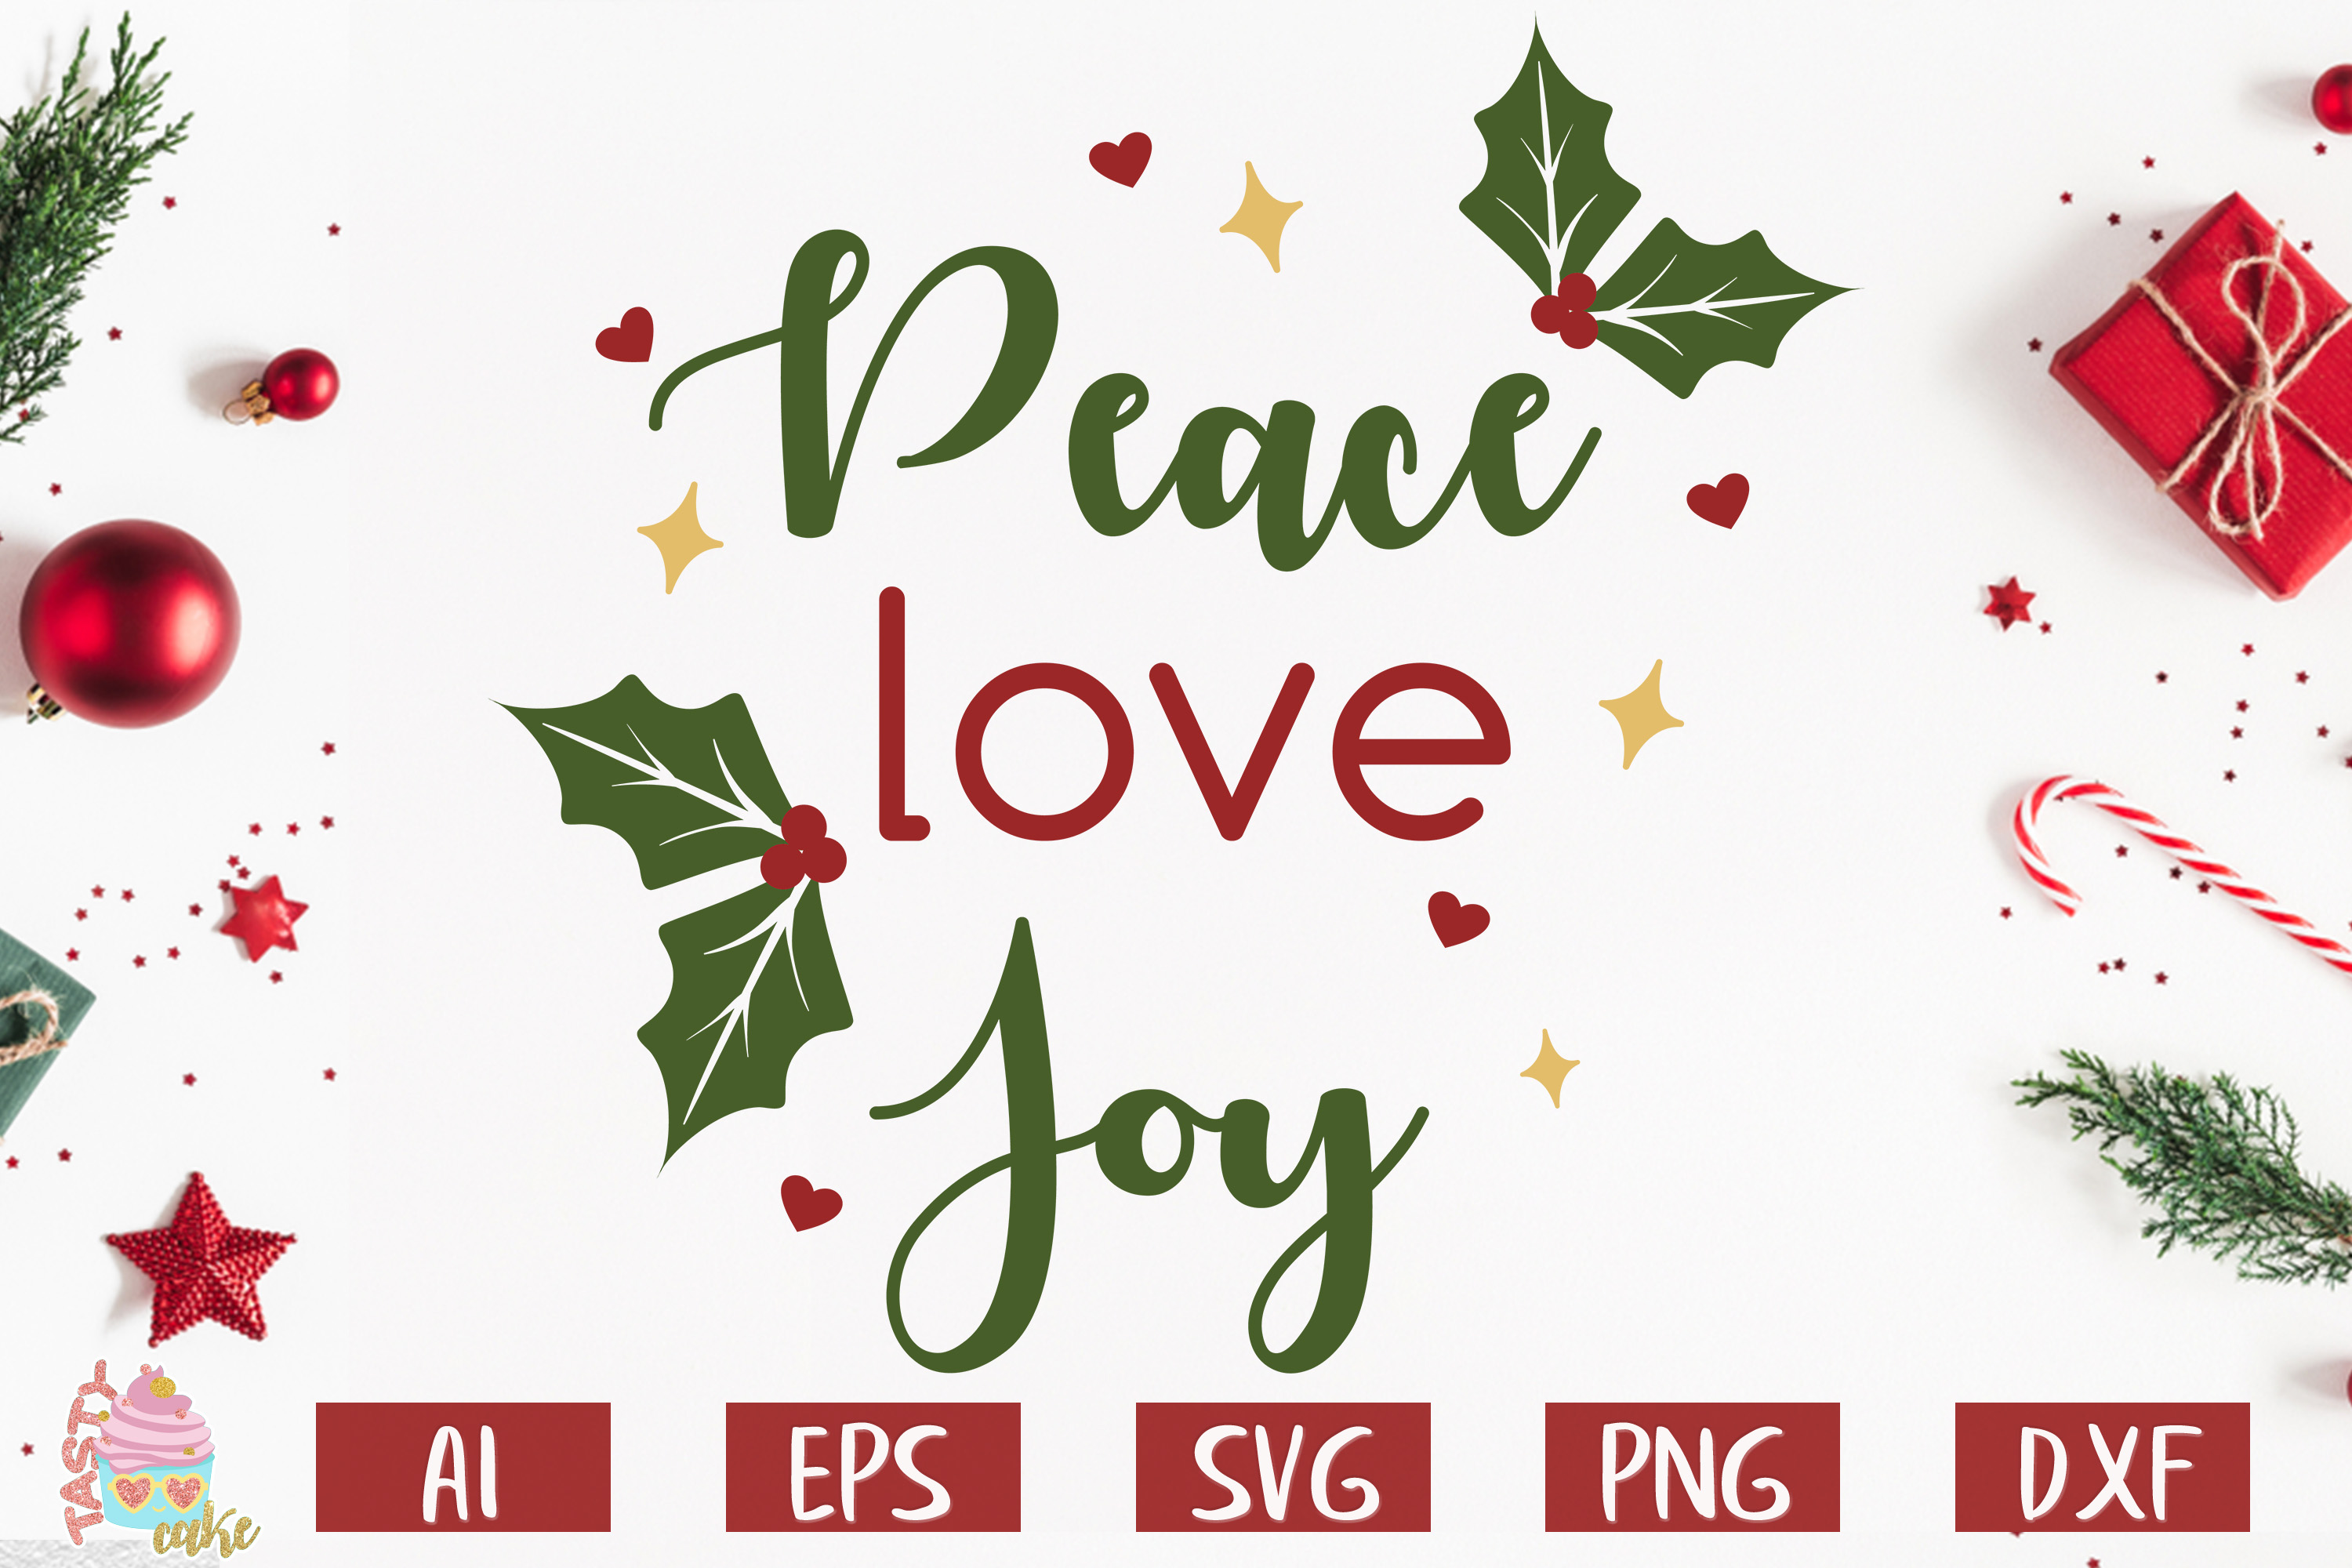 Peace Love Joy - Christmas SVG (377179) | SVGs | Design ...